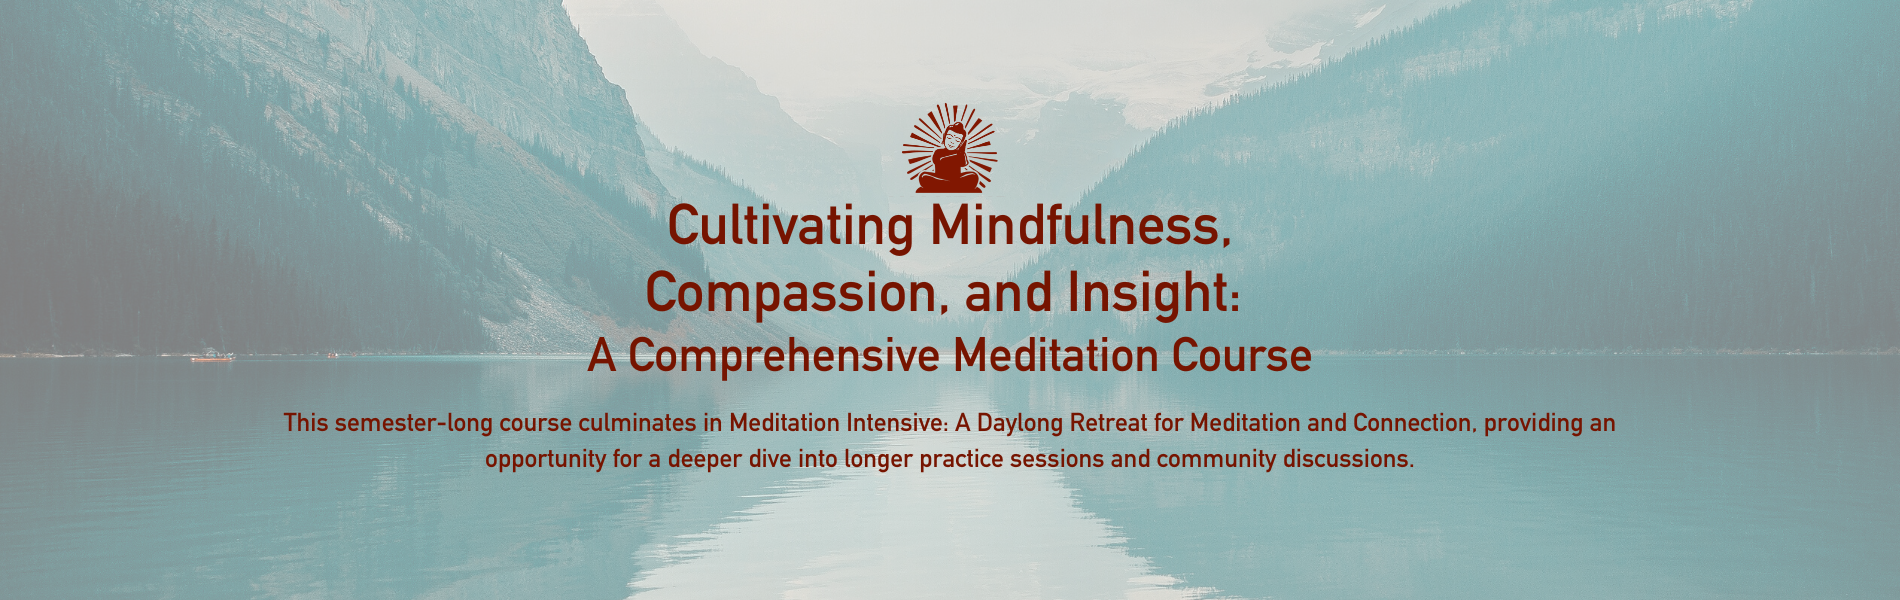 Center for Mindfulness & Compassion - Boston